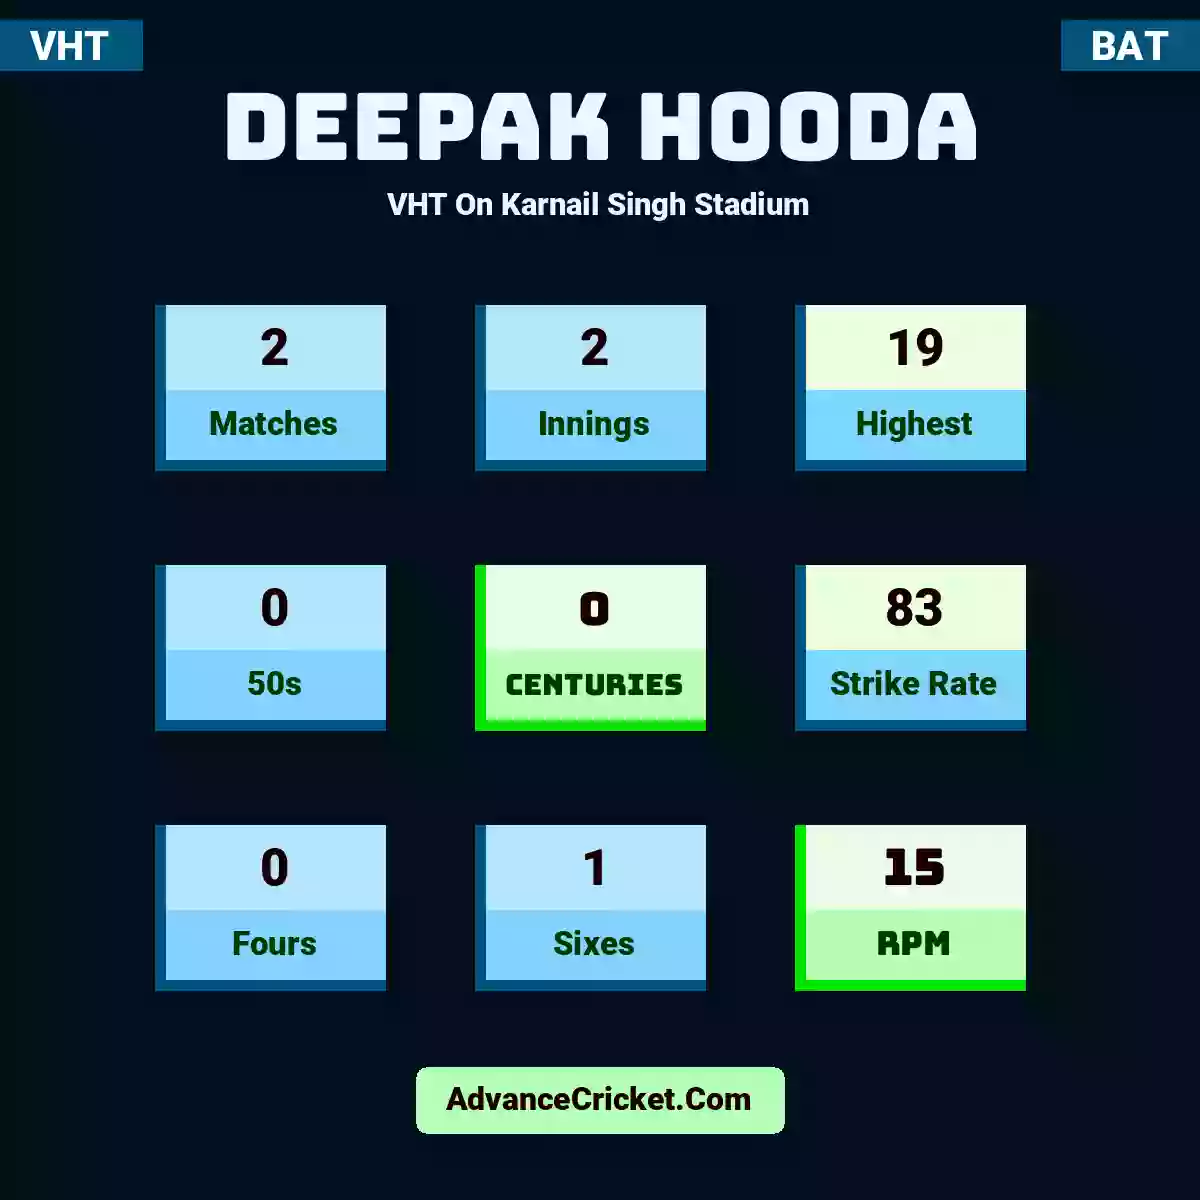 Deepak Hooda VHT  On Karnail Singh Stadium, Deepak Hooda played 2 matches, scored 19 runs as highest, 0 half-centuries, and 0 centuries, with a strike rate of 83. D.Hooda hit 0 fours and 1 sixes, with an RPM of 15.